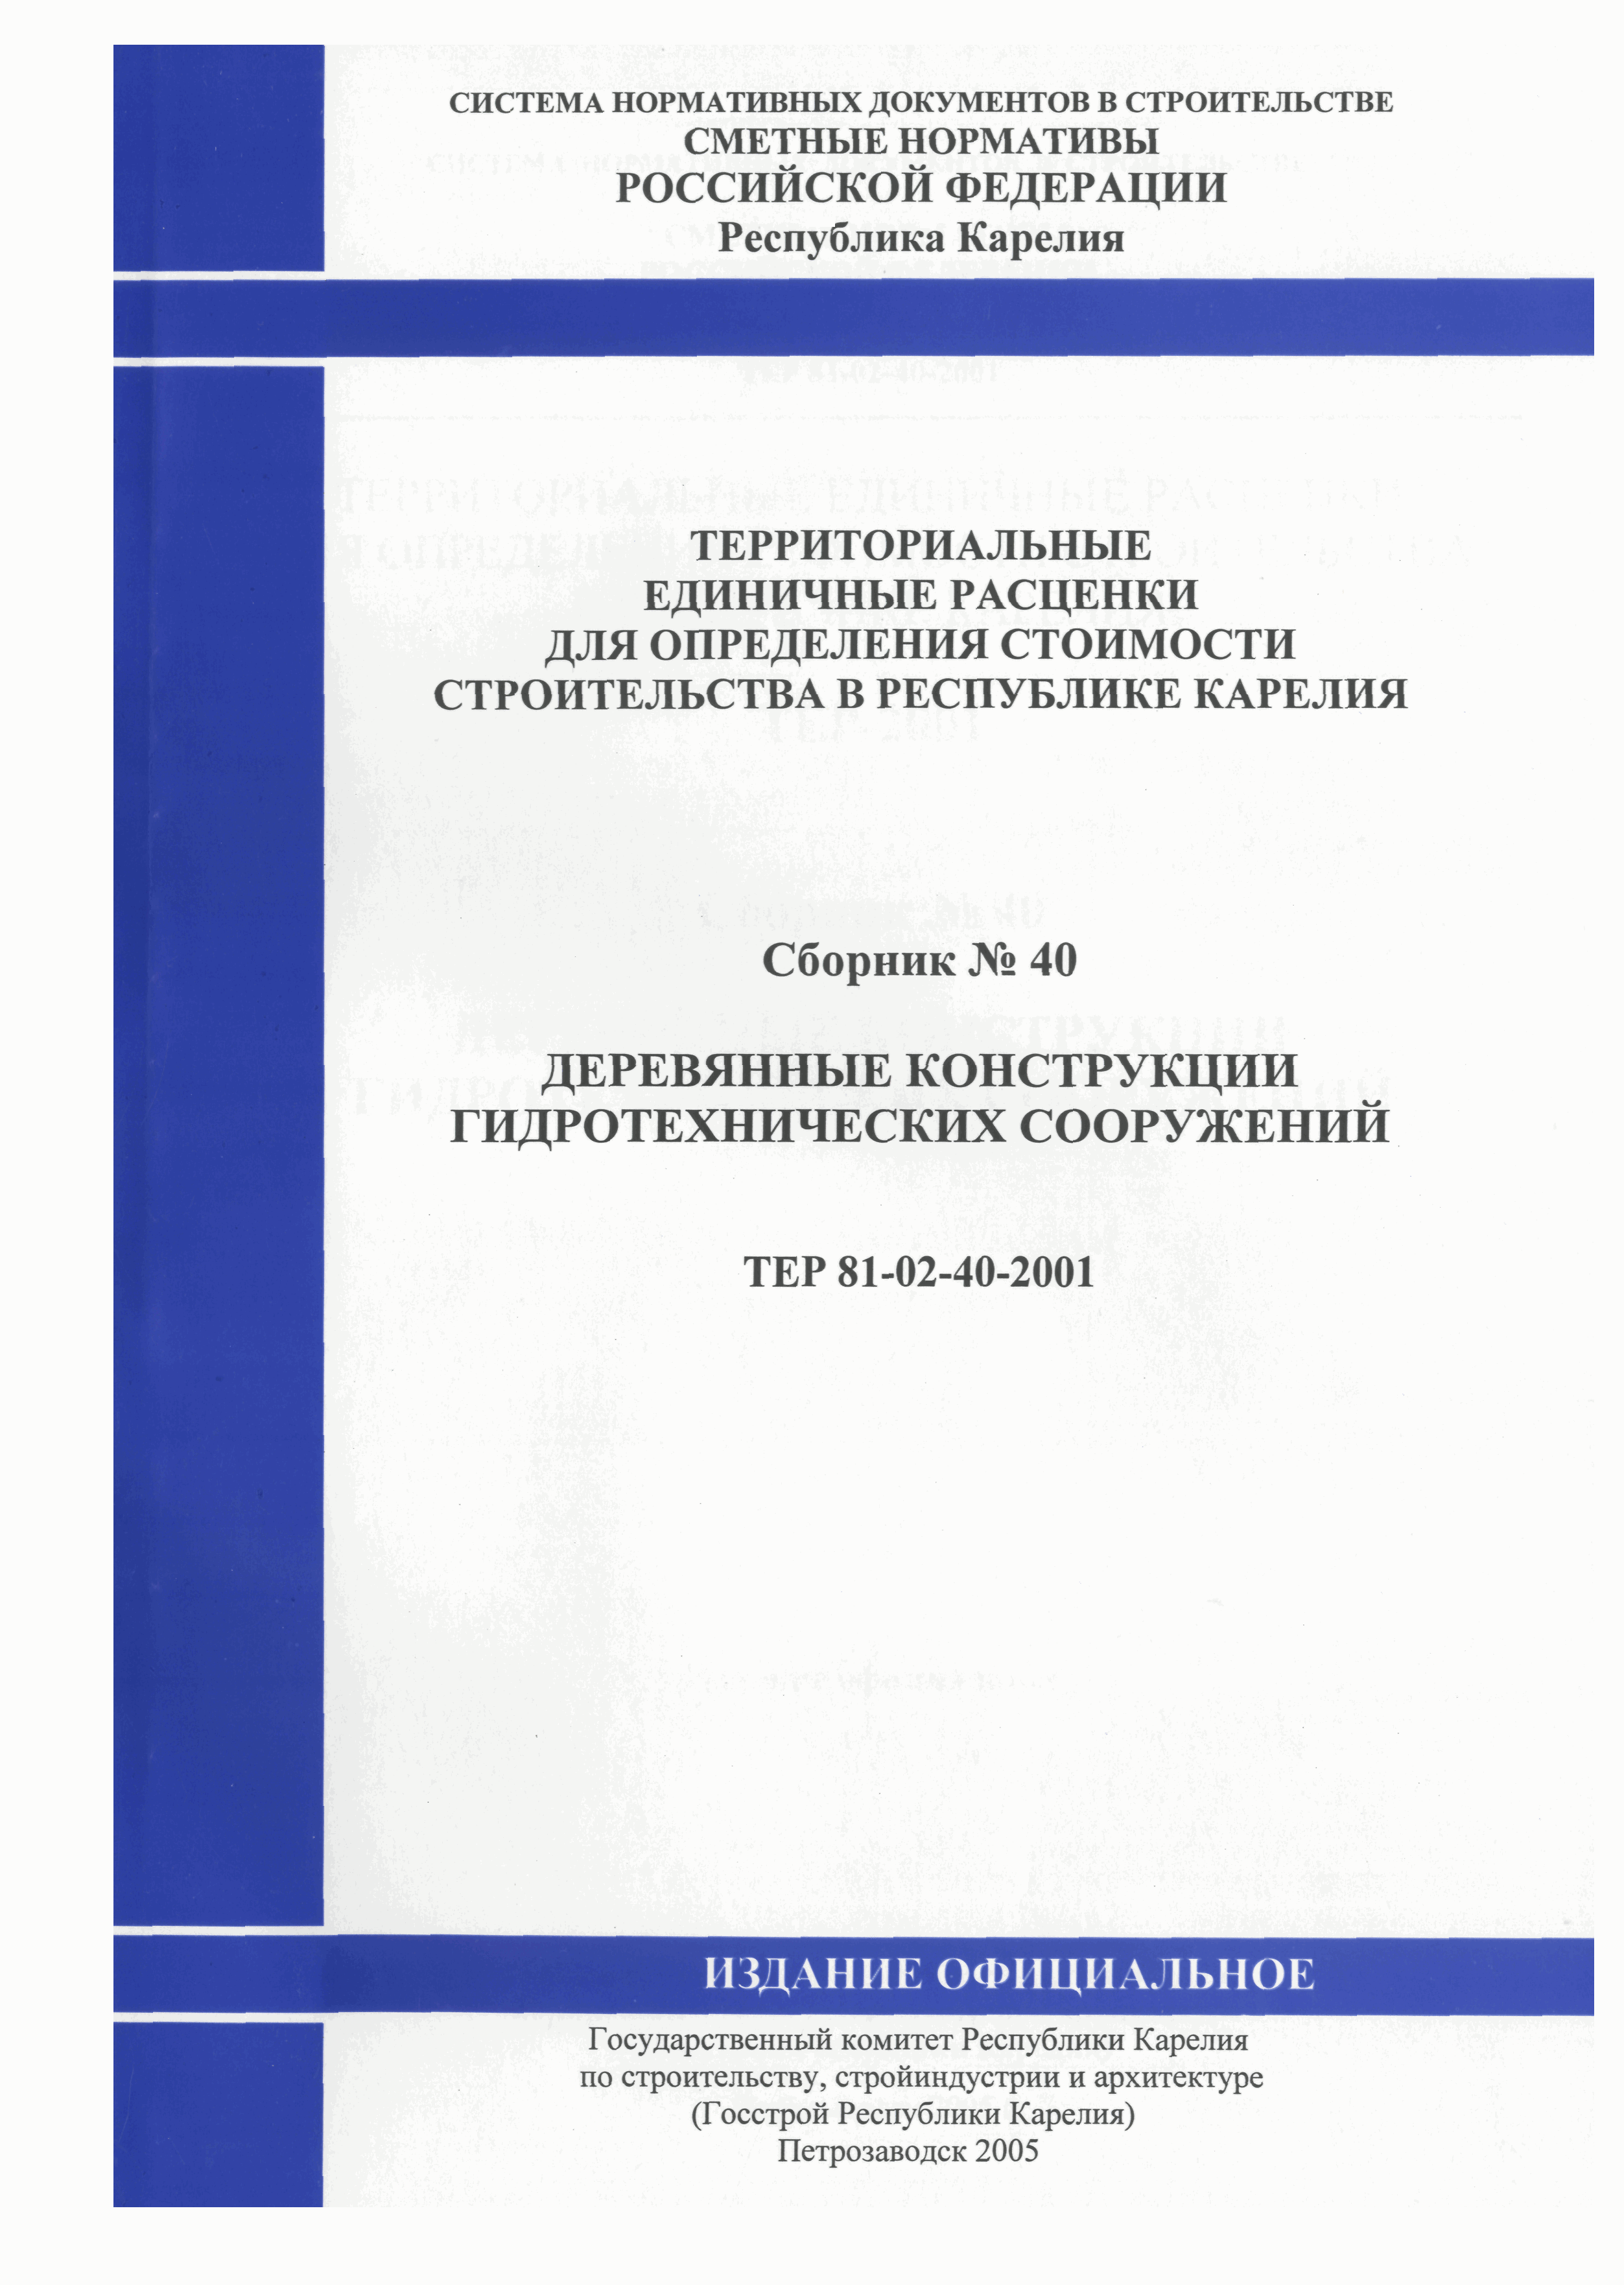 ТЕР Республика Карелия 2001-40